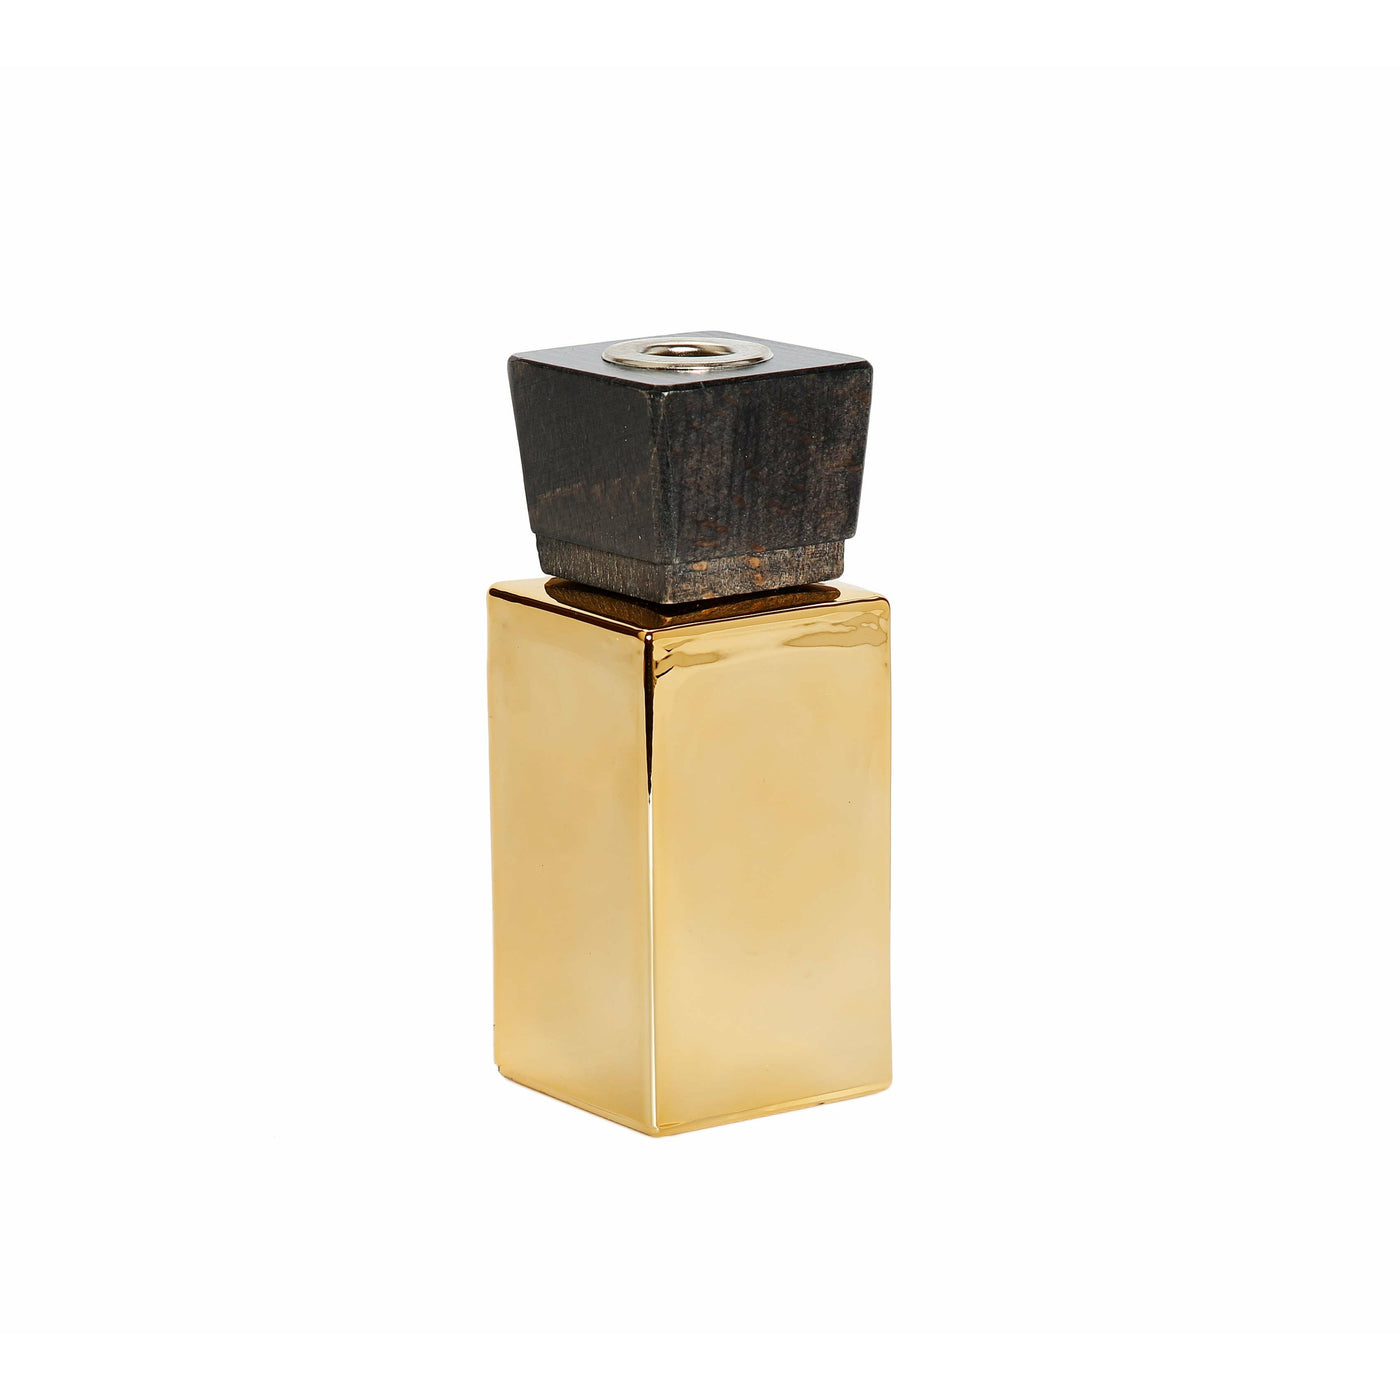 Gold Bottle Diffuser with Black Cap, "Iris & Rose" Scent